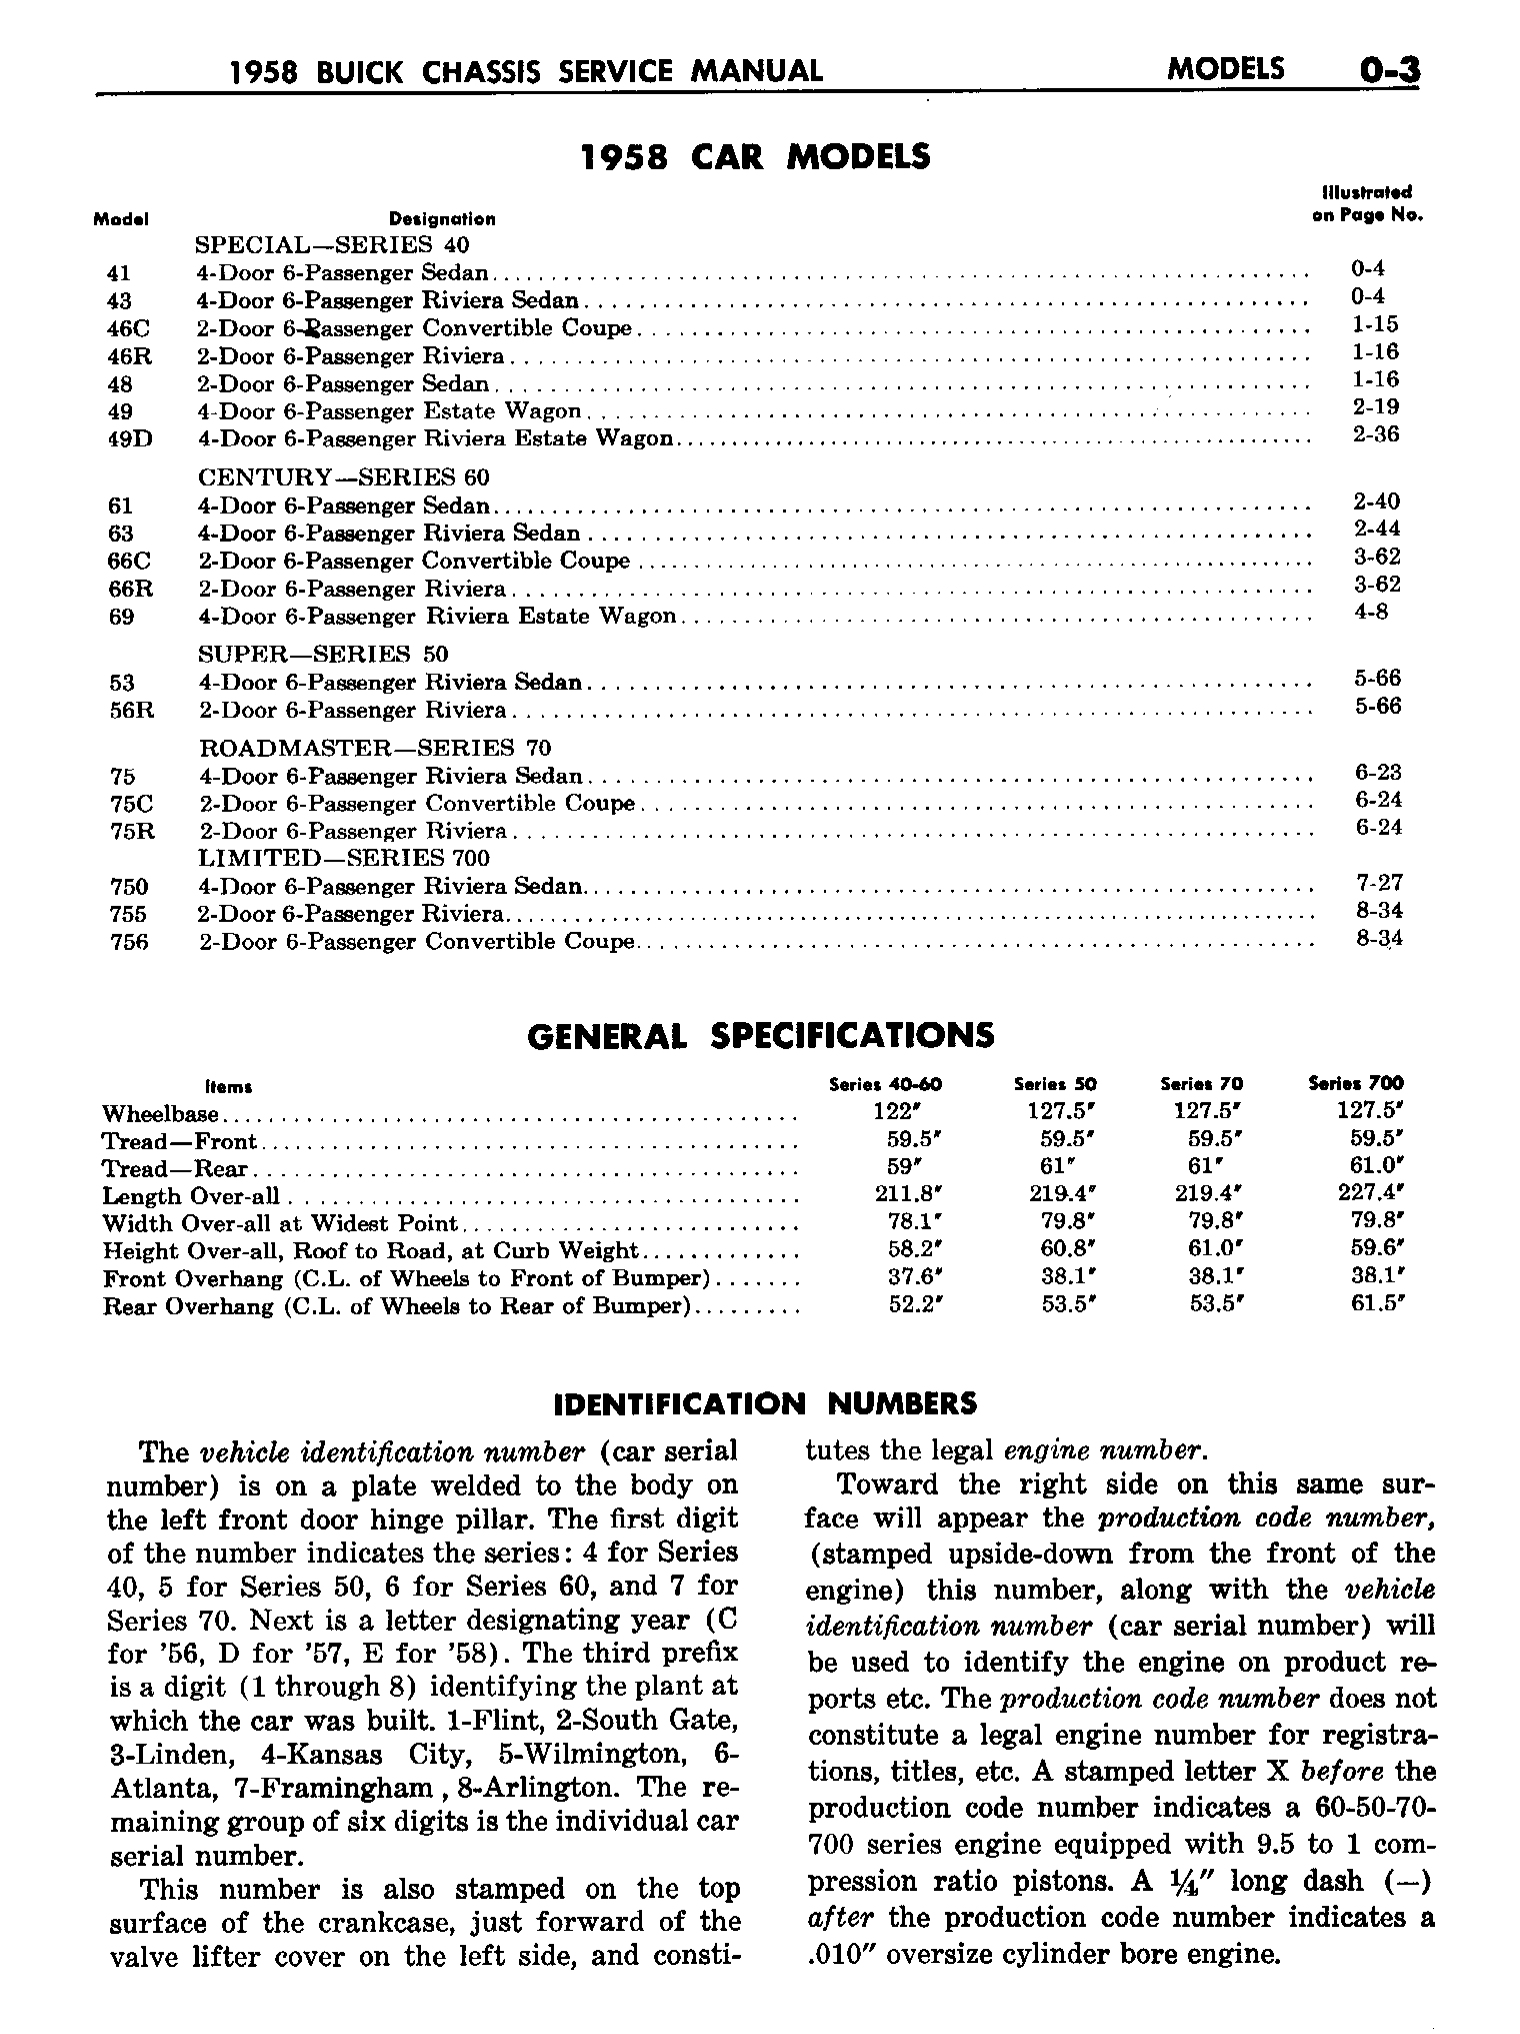 n_01 1958 Buick Shop Manual - Gen Information_5.jpg